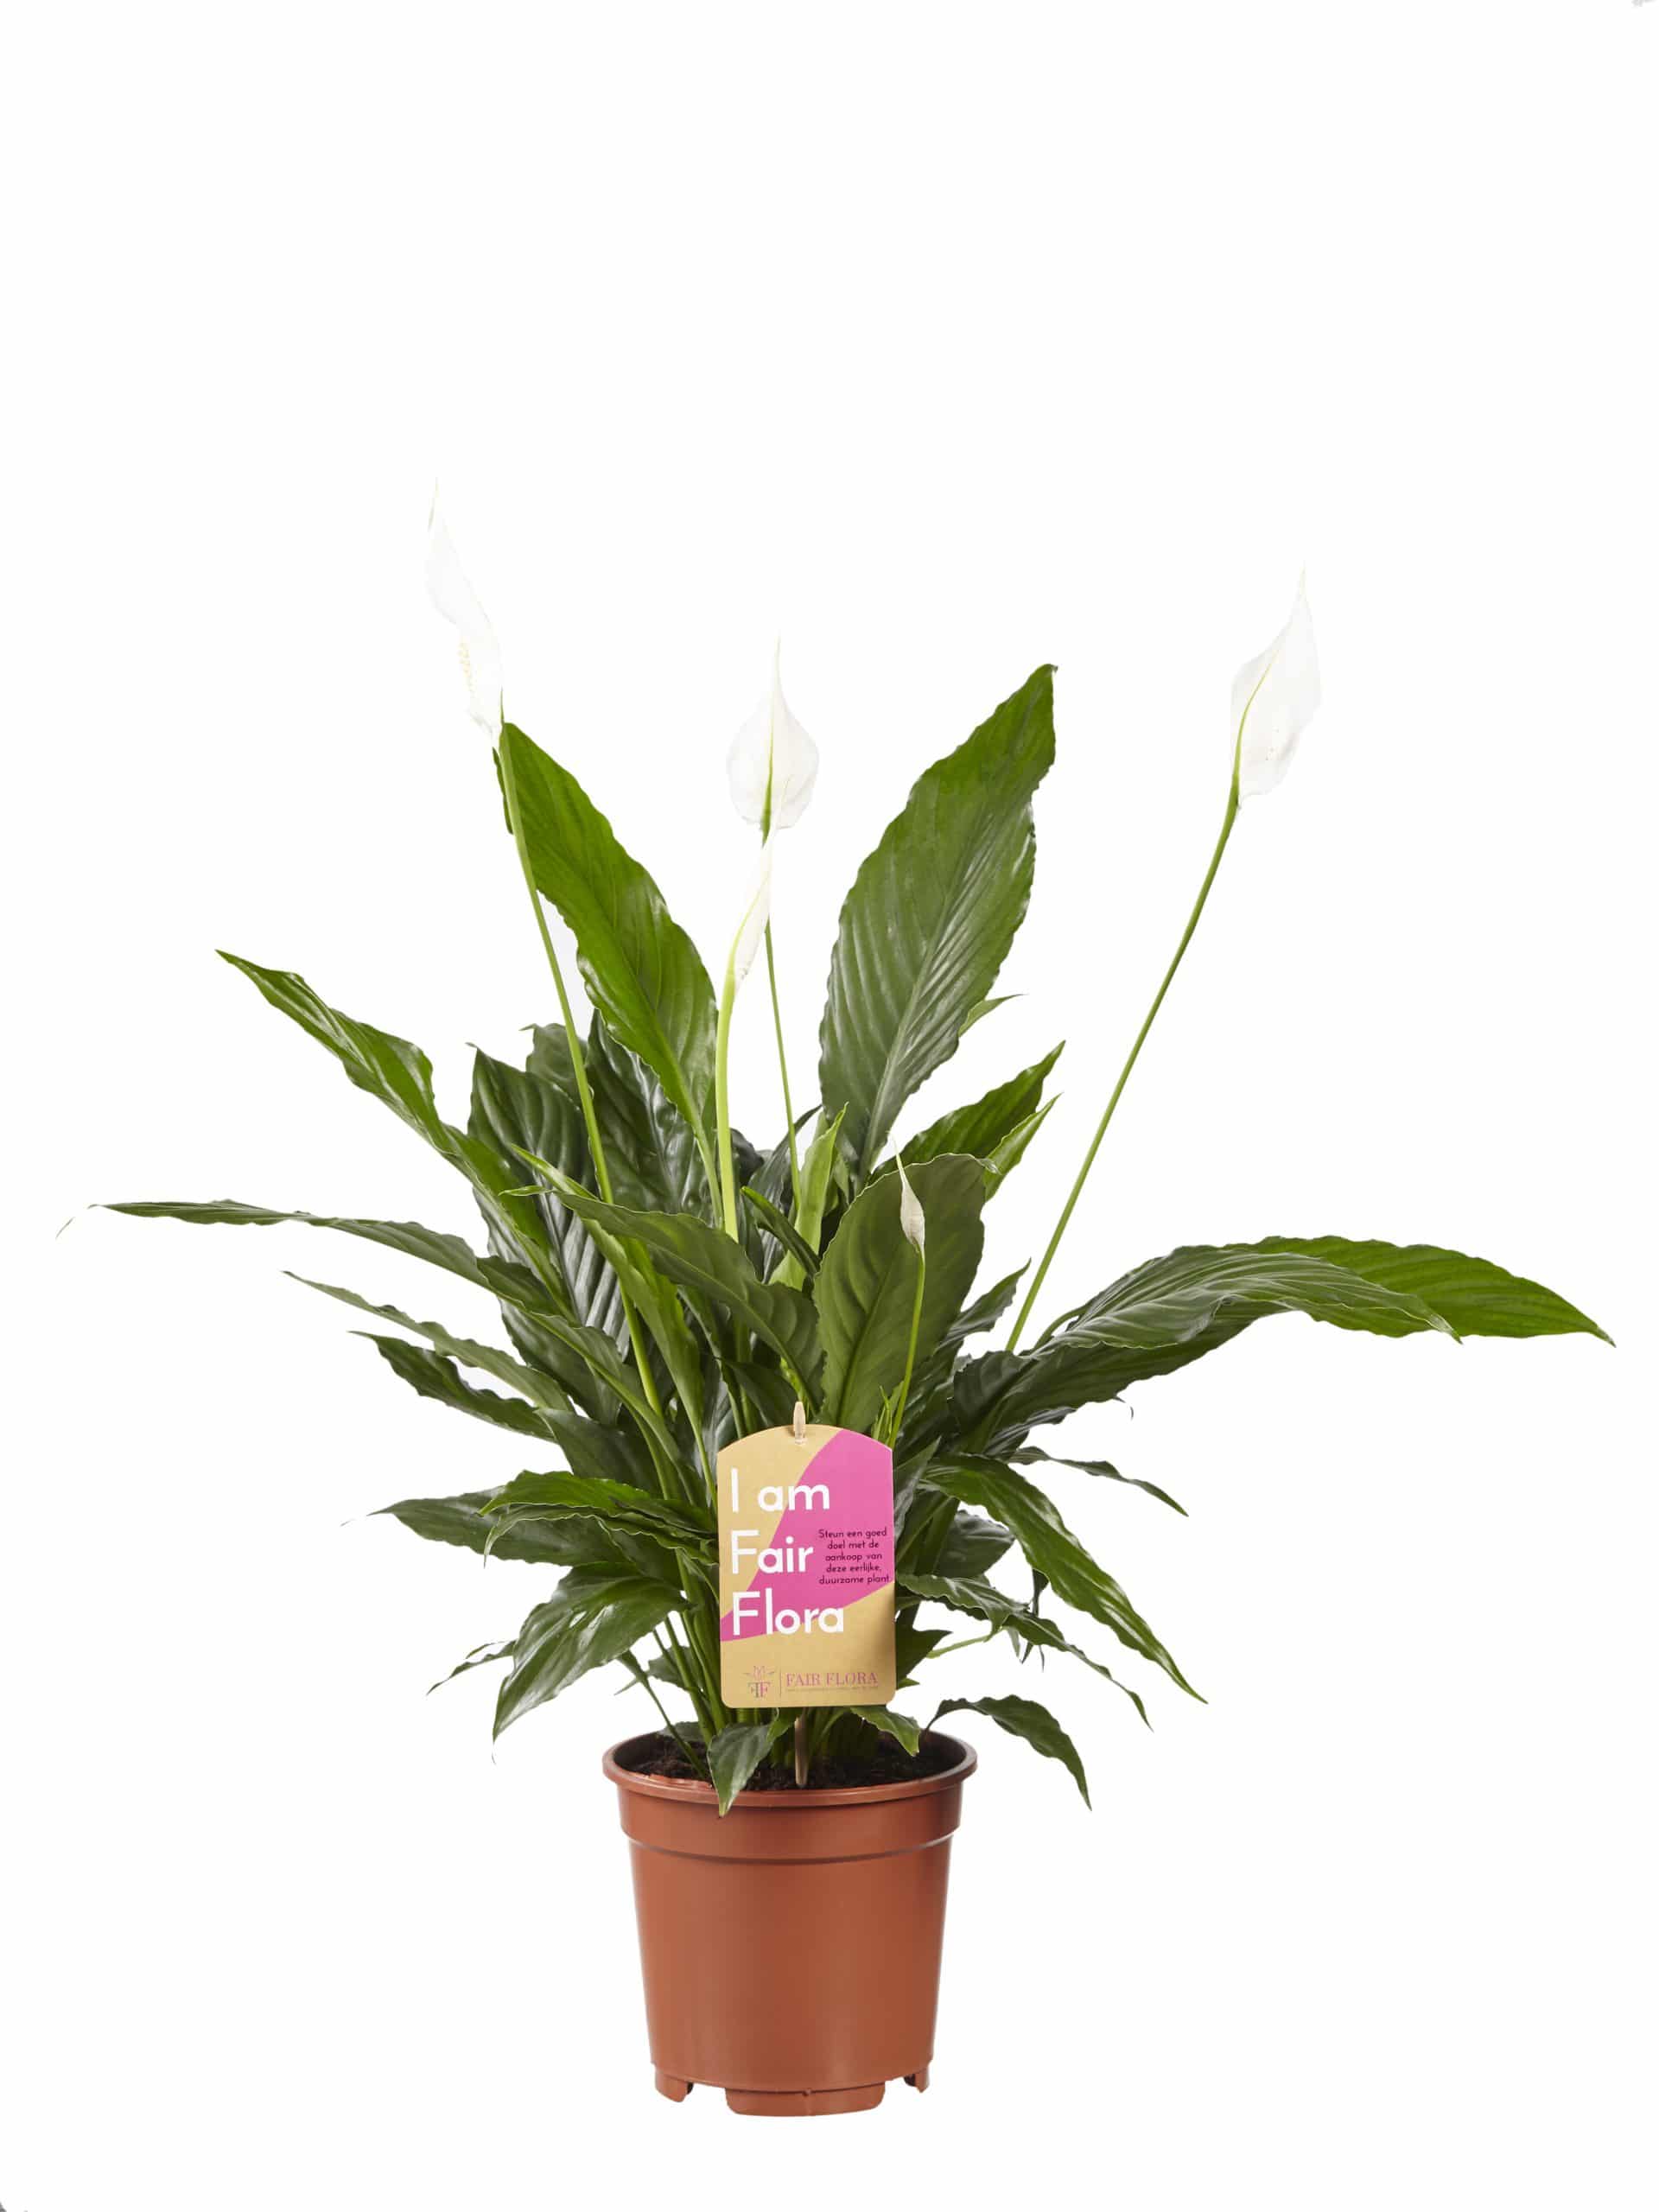 Maar Luchtpost Ewell Lepelplant Spathiphyllum Vivaldi - 2 stuks - Een echte Amazone plant!